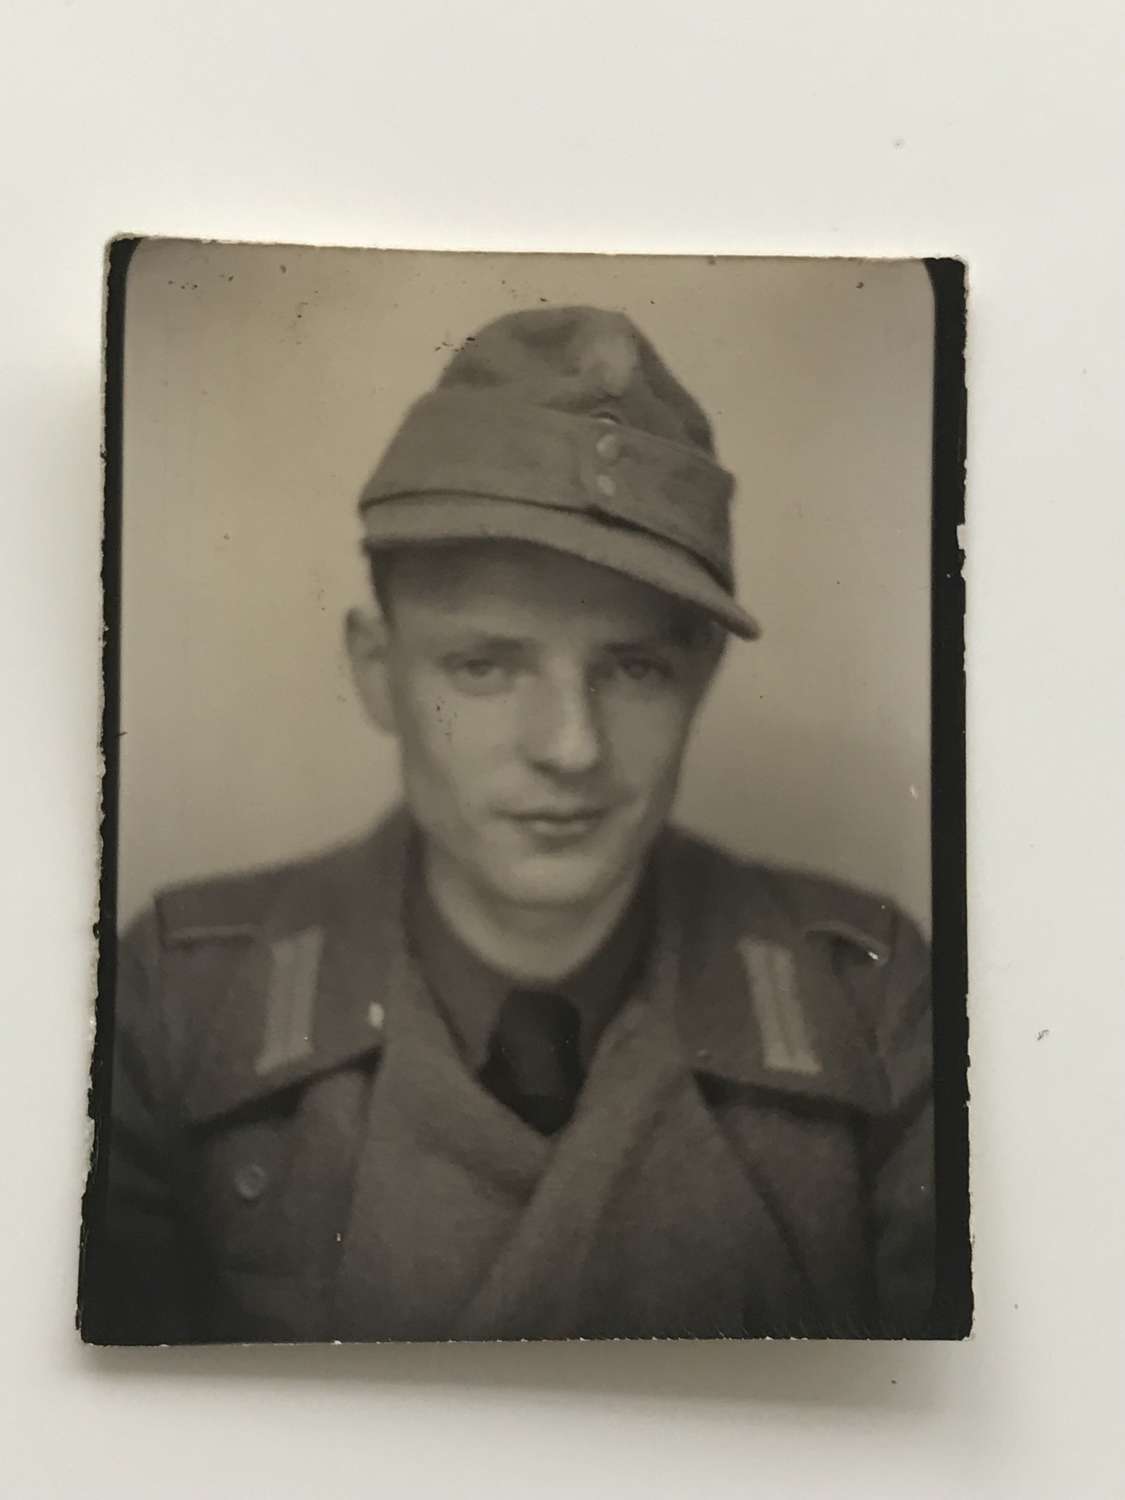 A Soldbuch photo of a STUG crew member  in uniform